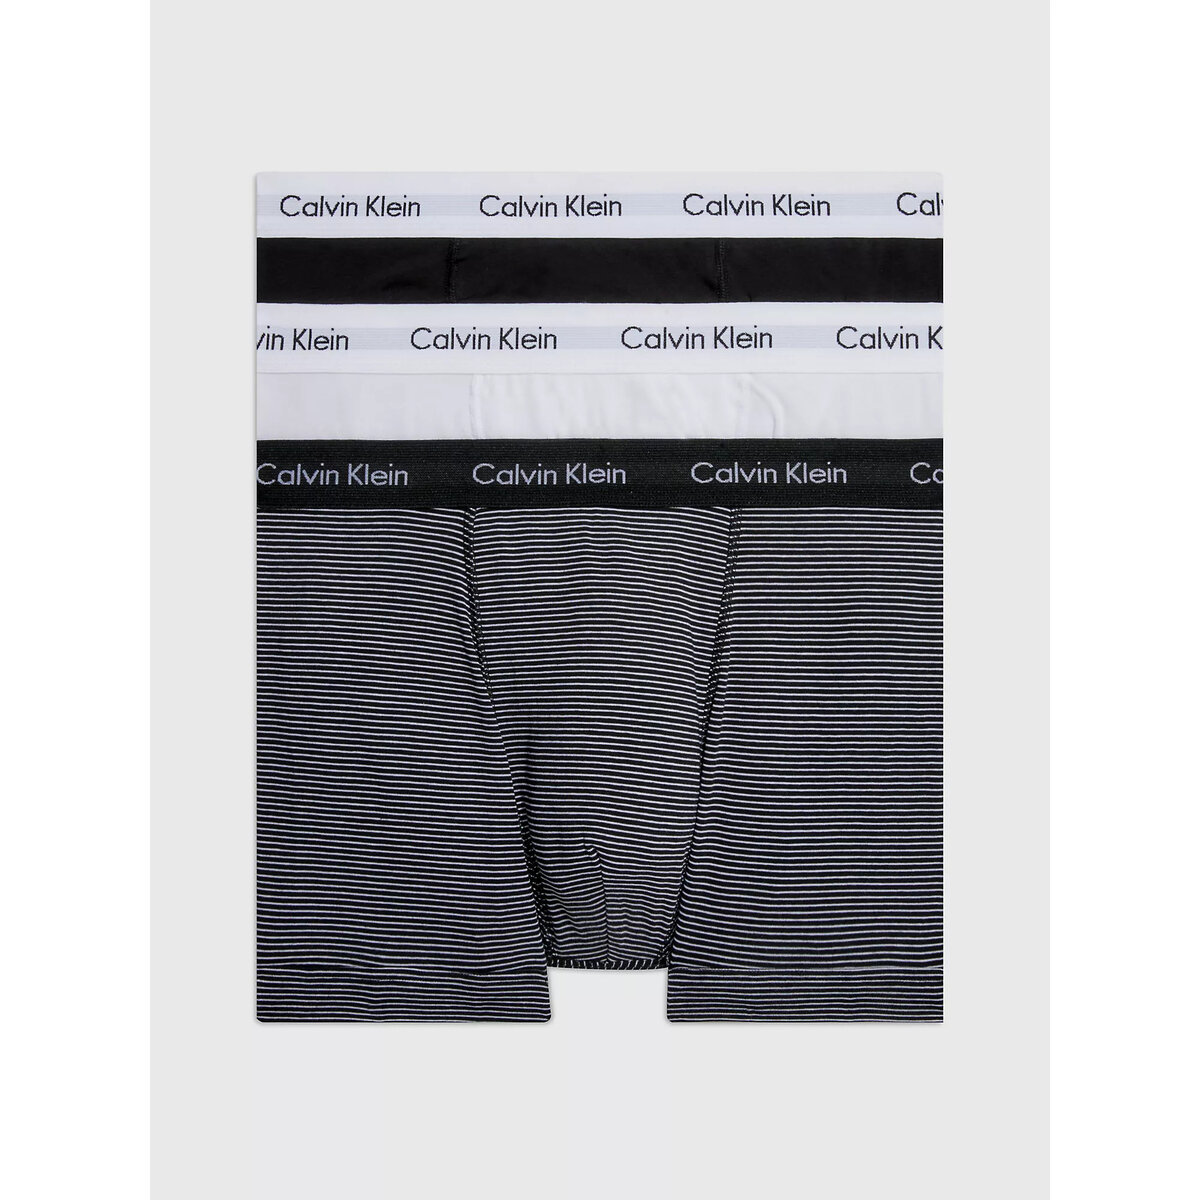 Mužské boxerky ESSENTIALS 3 balení - Calvin Klein, L i652_0000U2662GIOT005